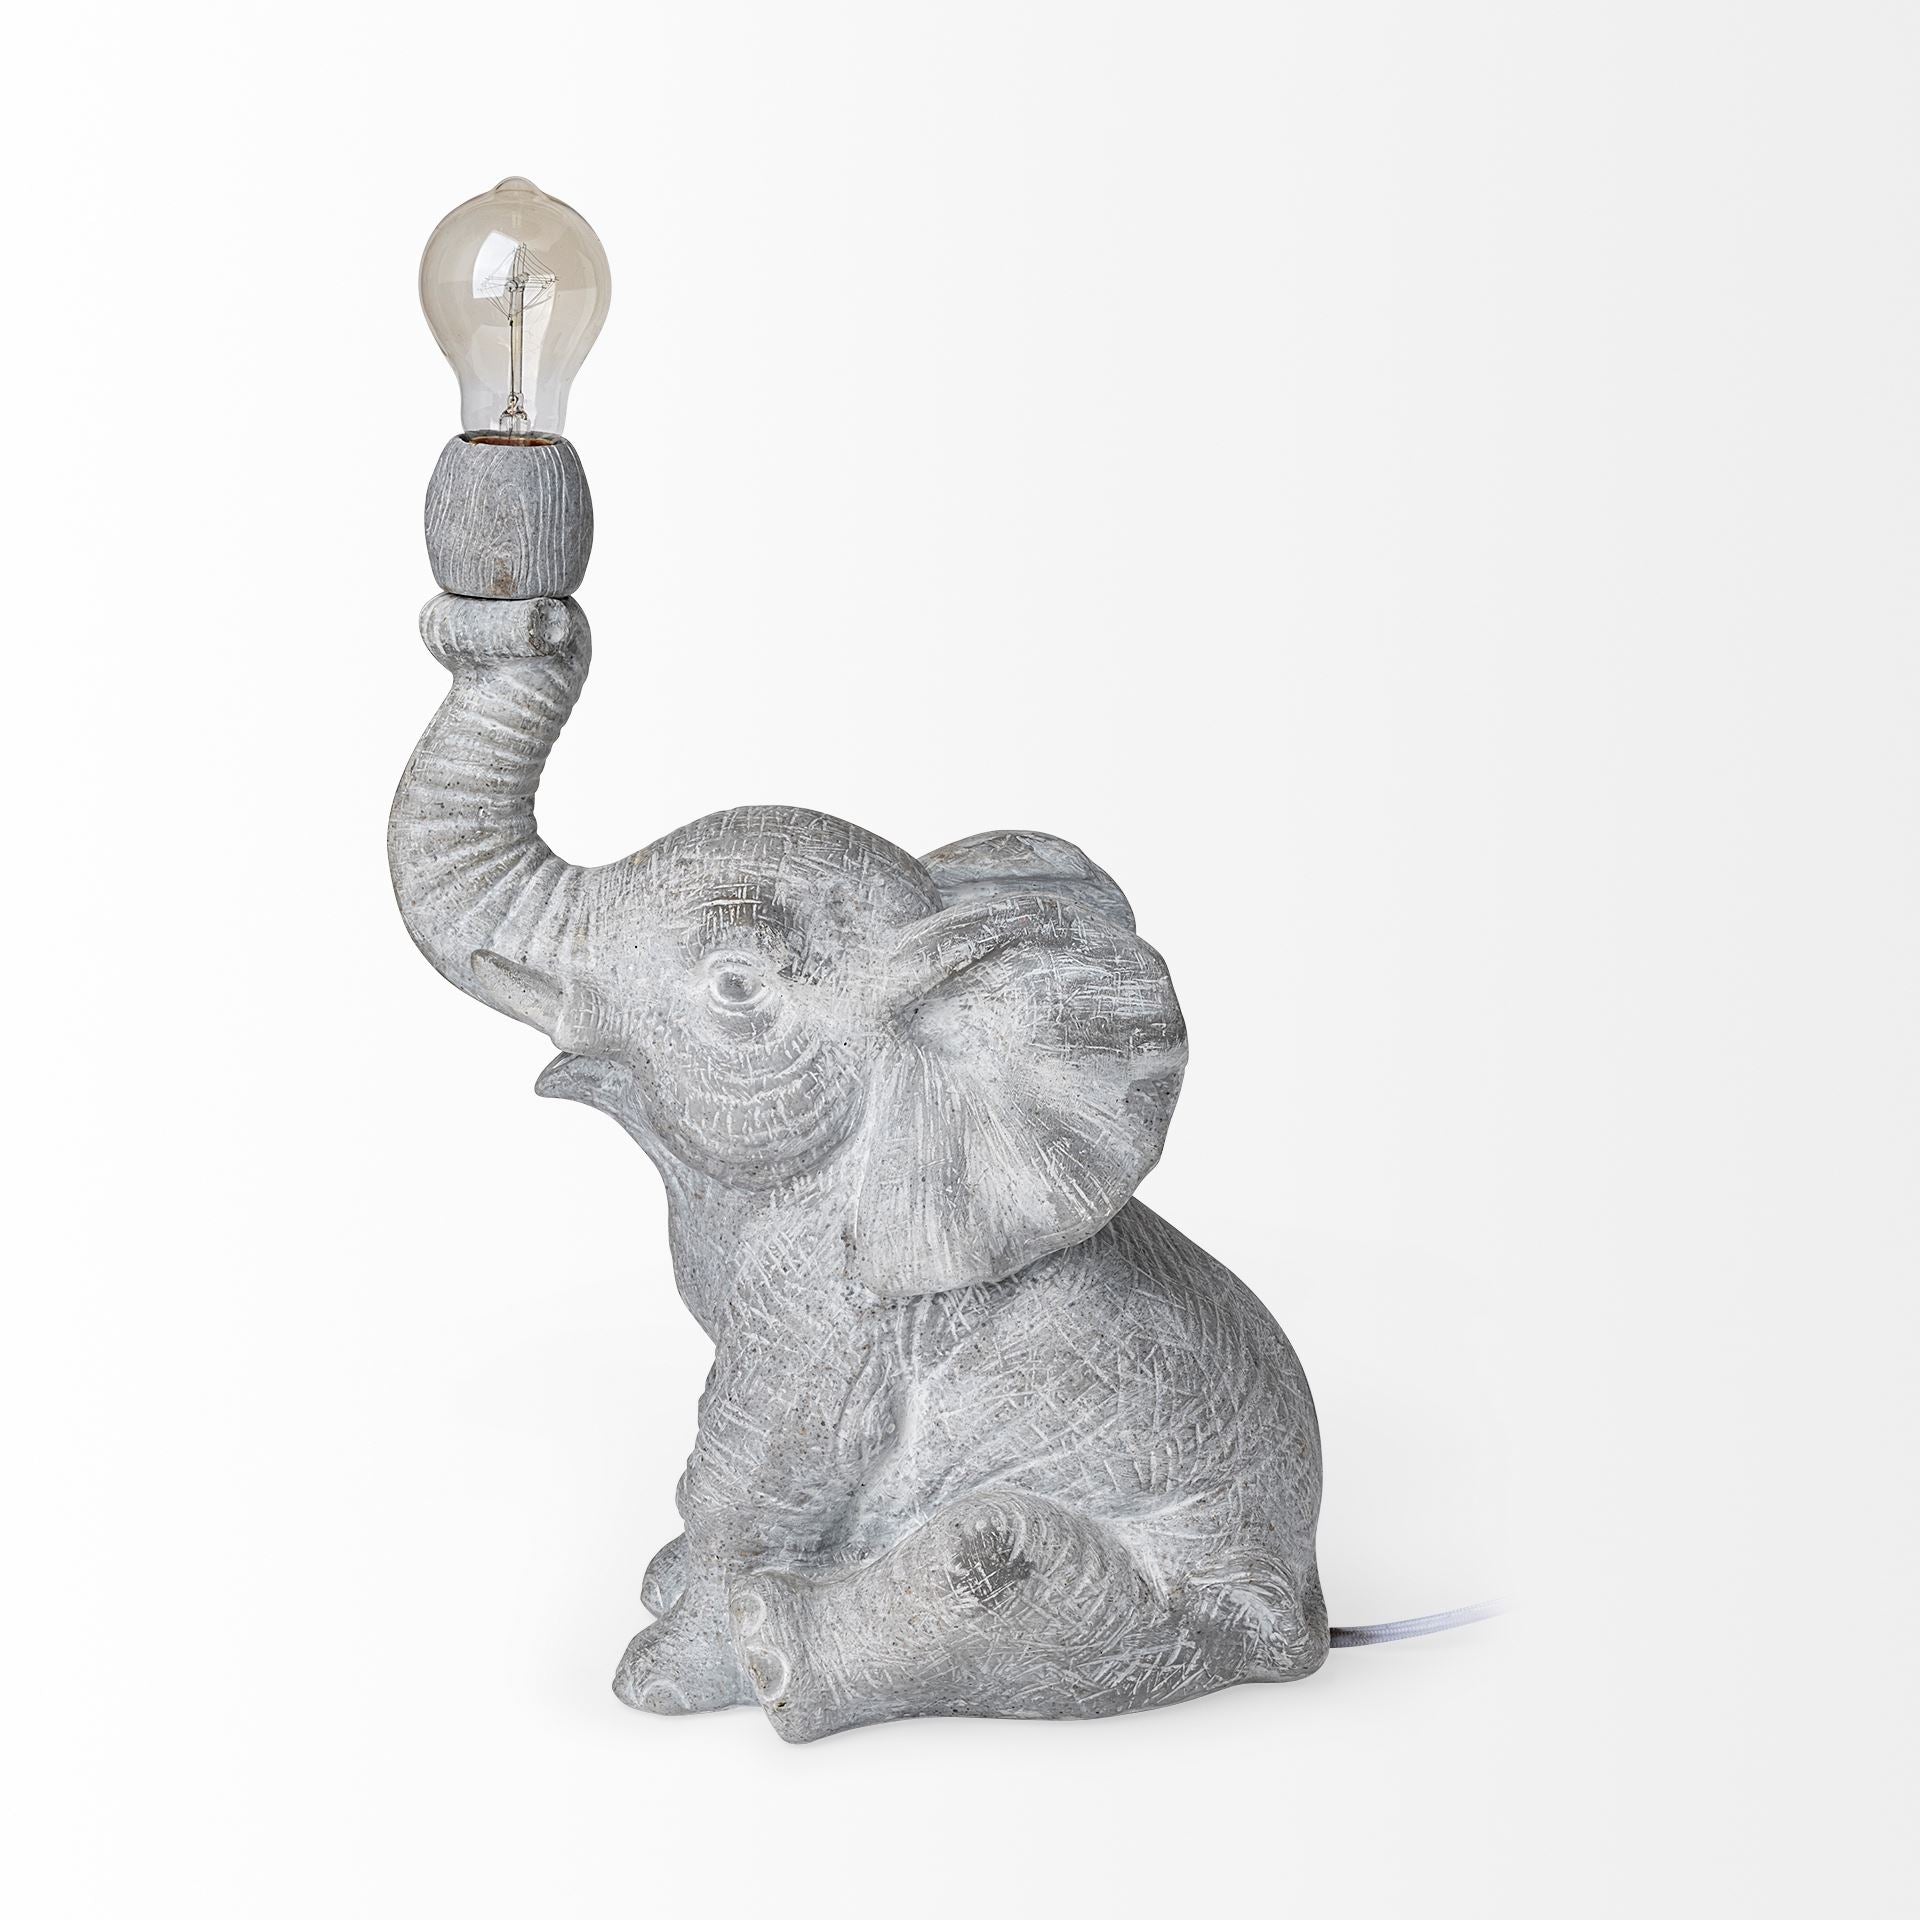 Tantor Elephant Table Lamp